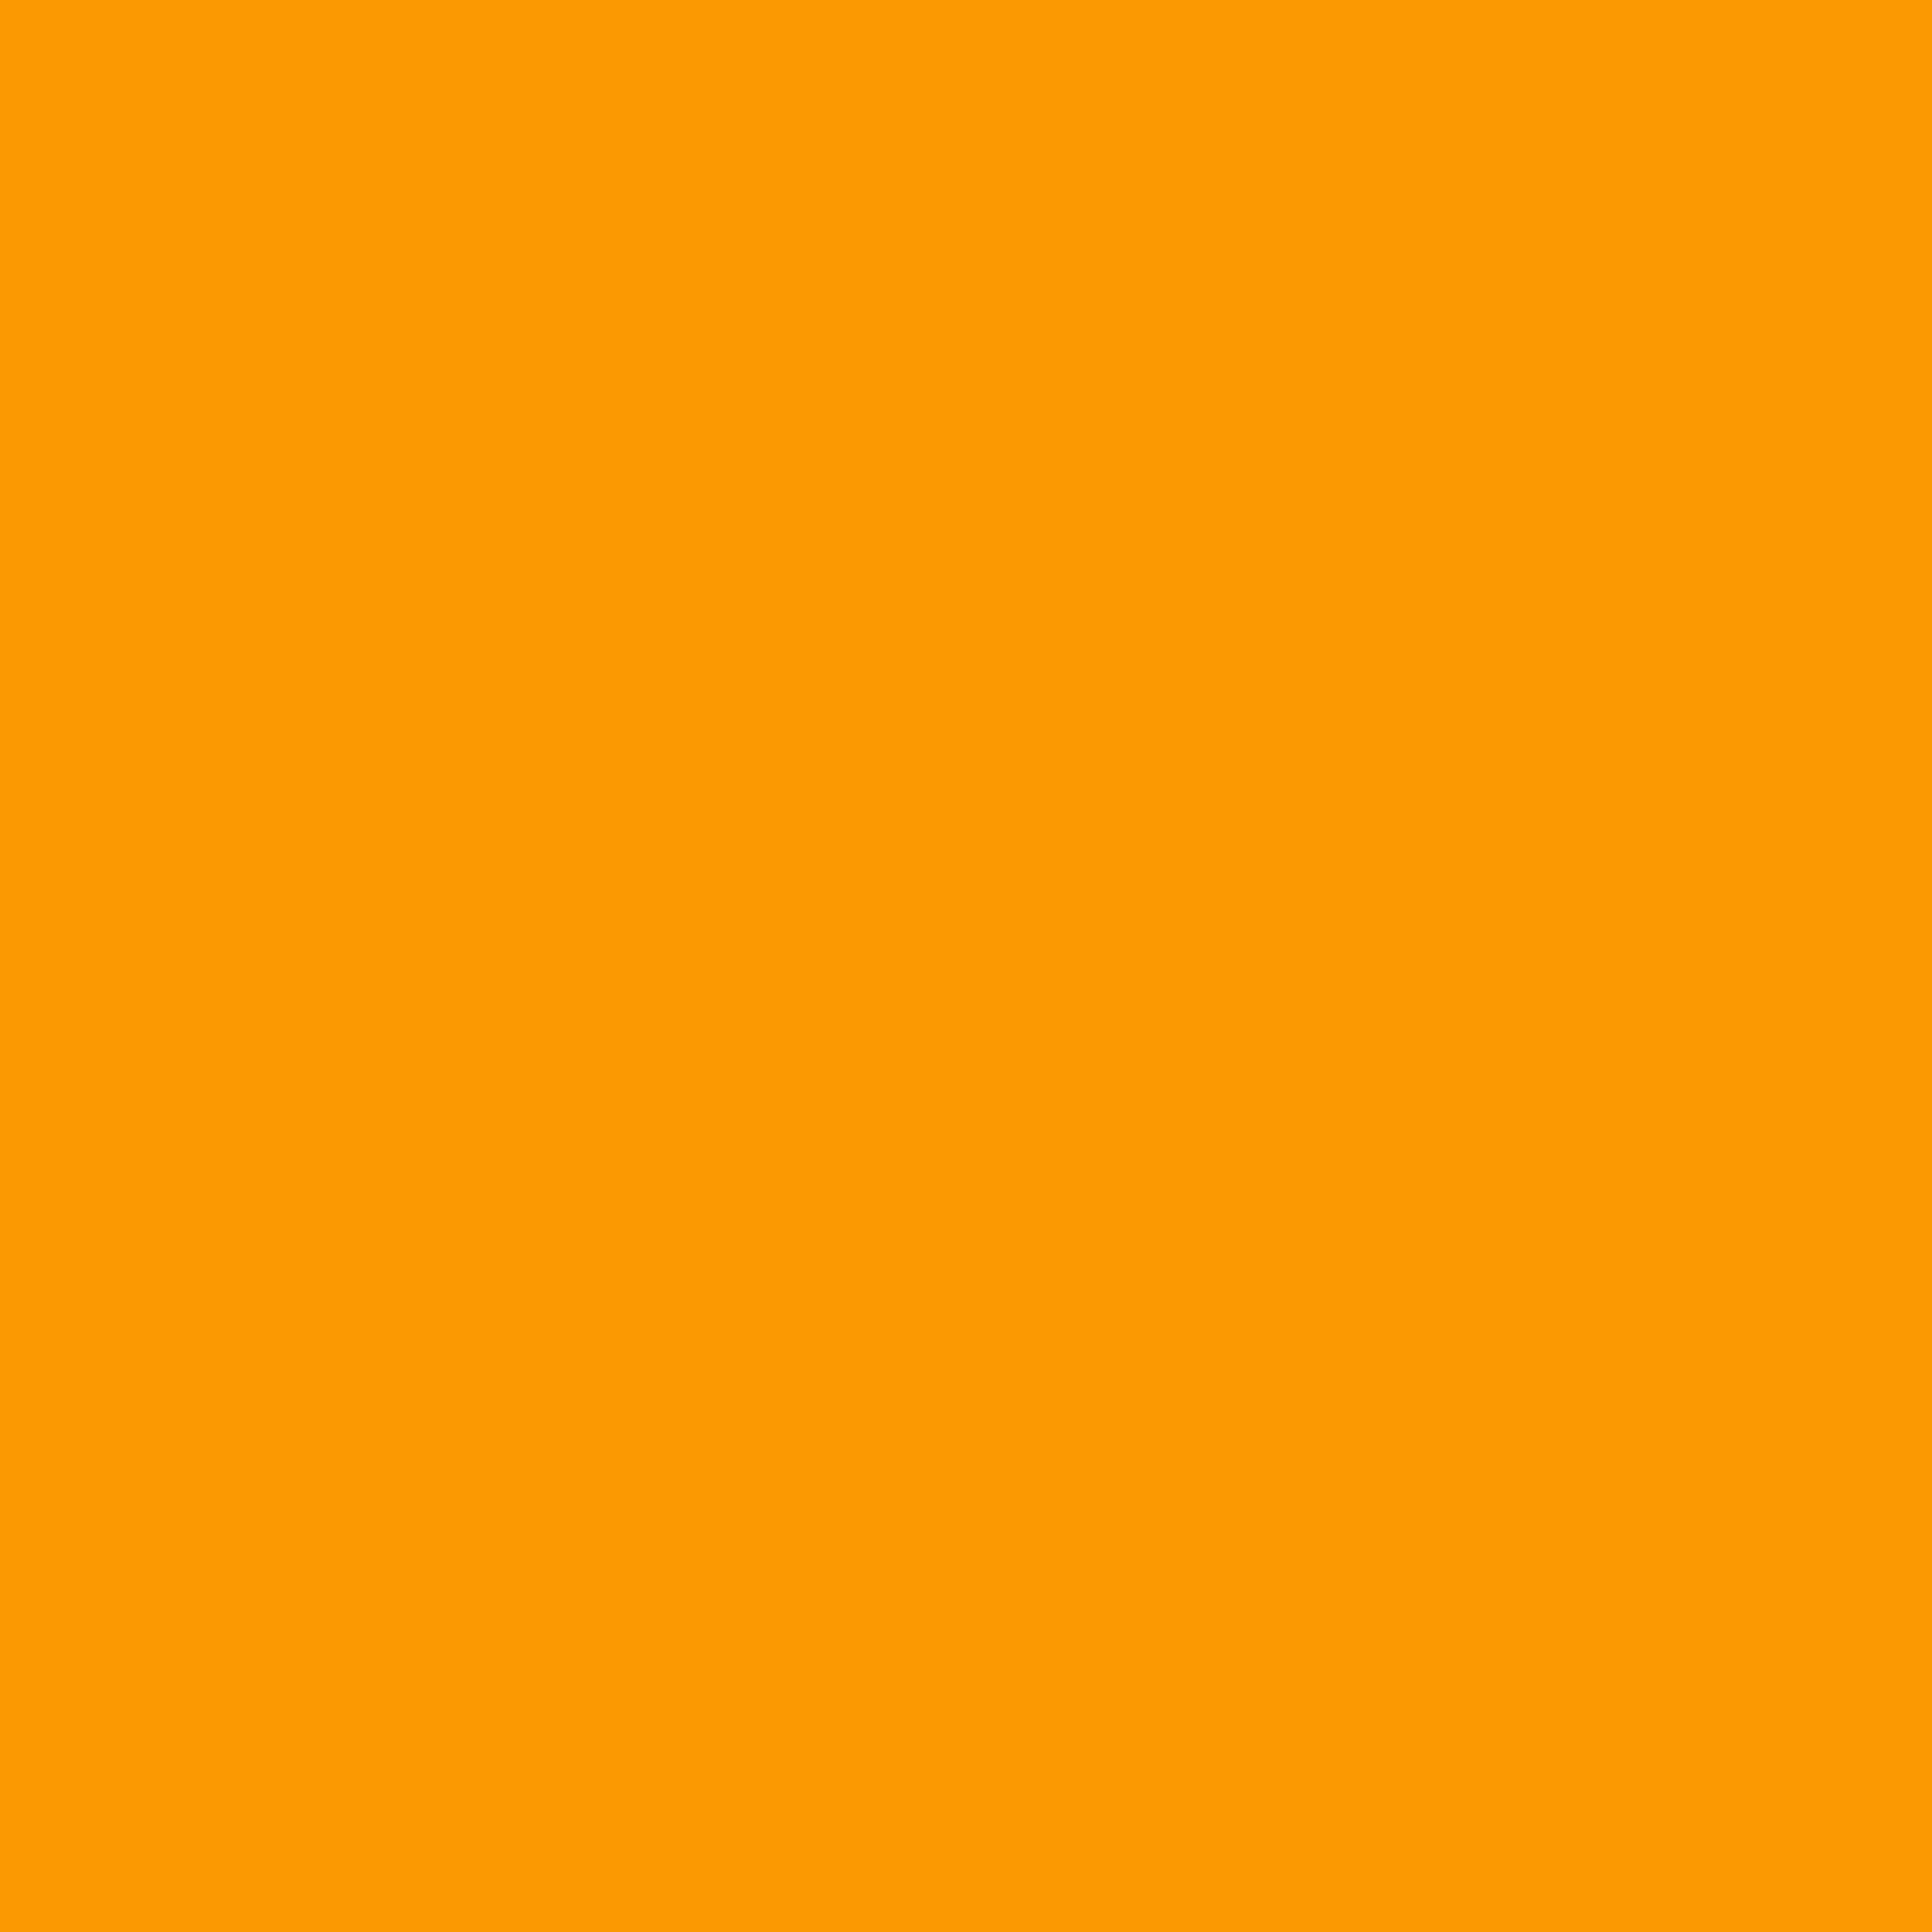 2732x2732 Orange RYB Solid Color Background